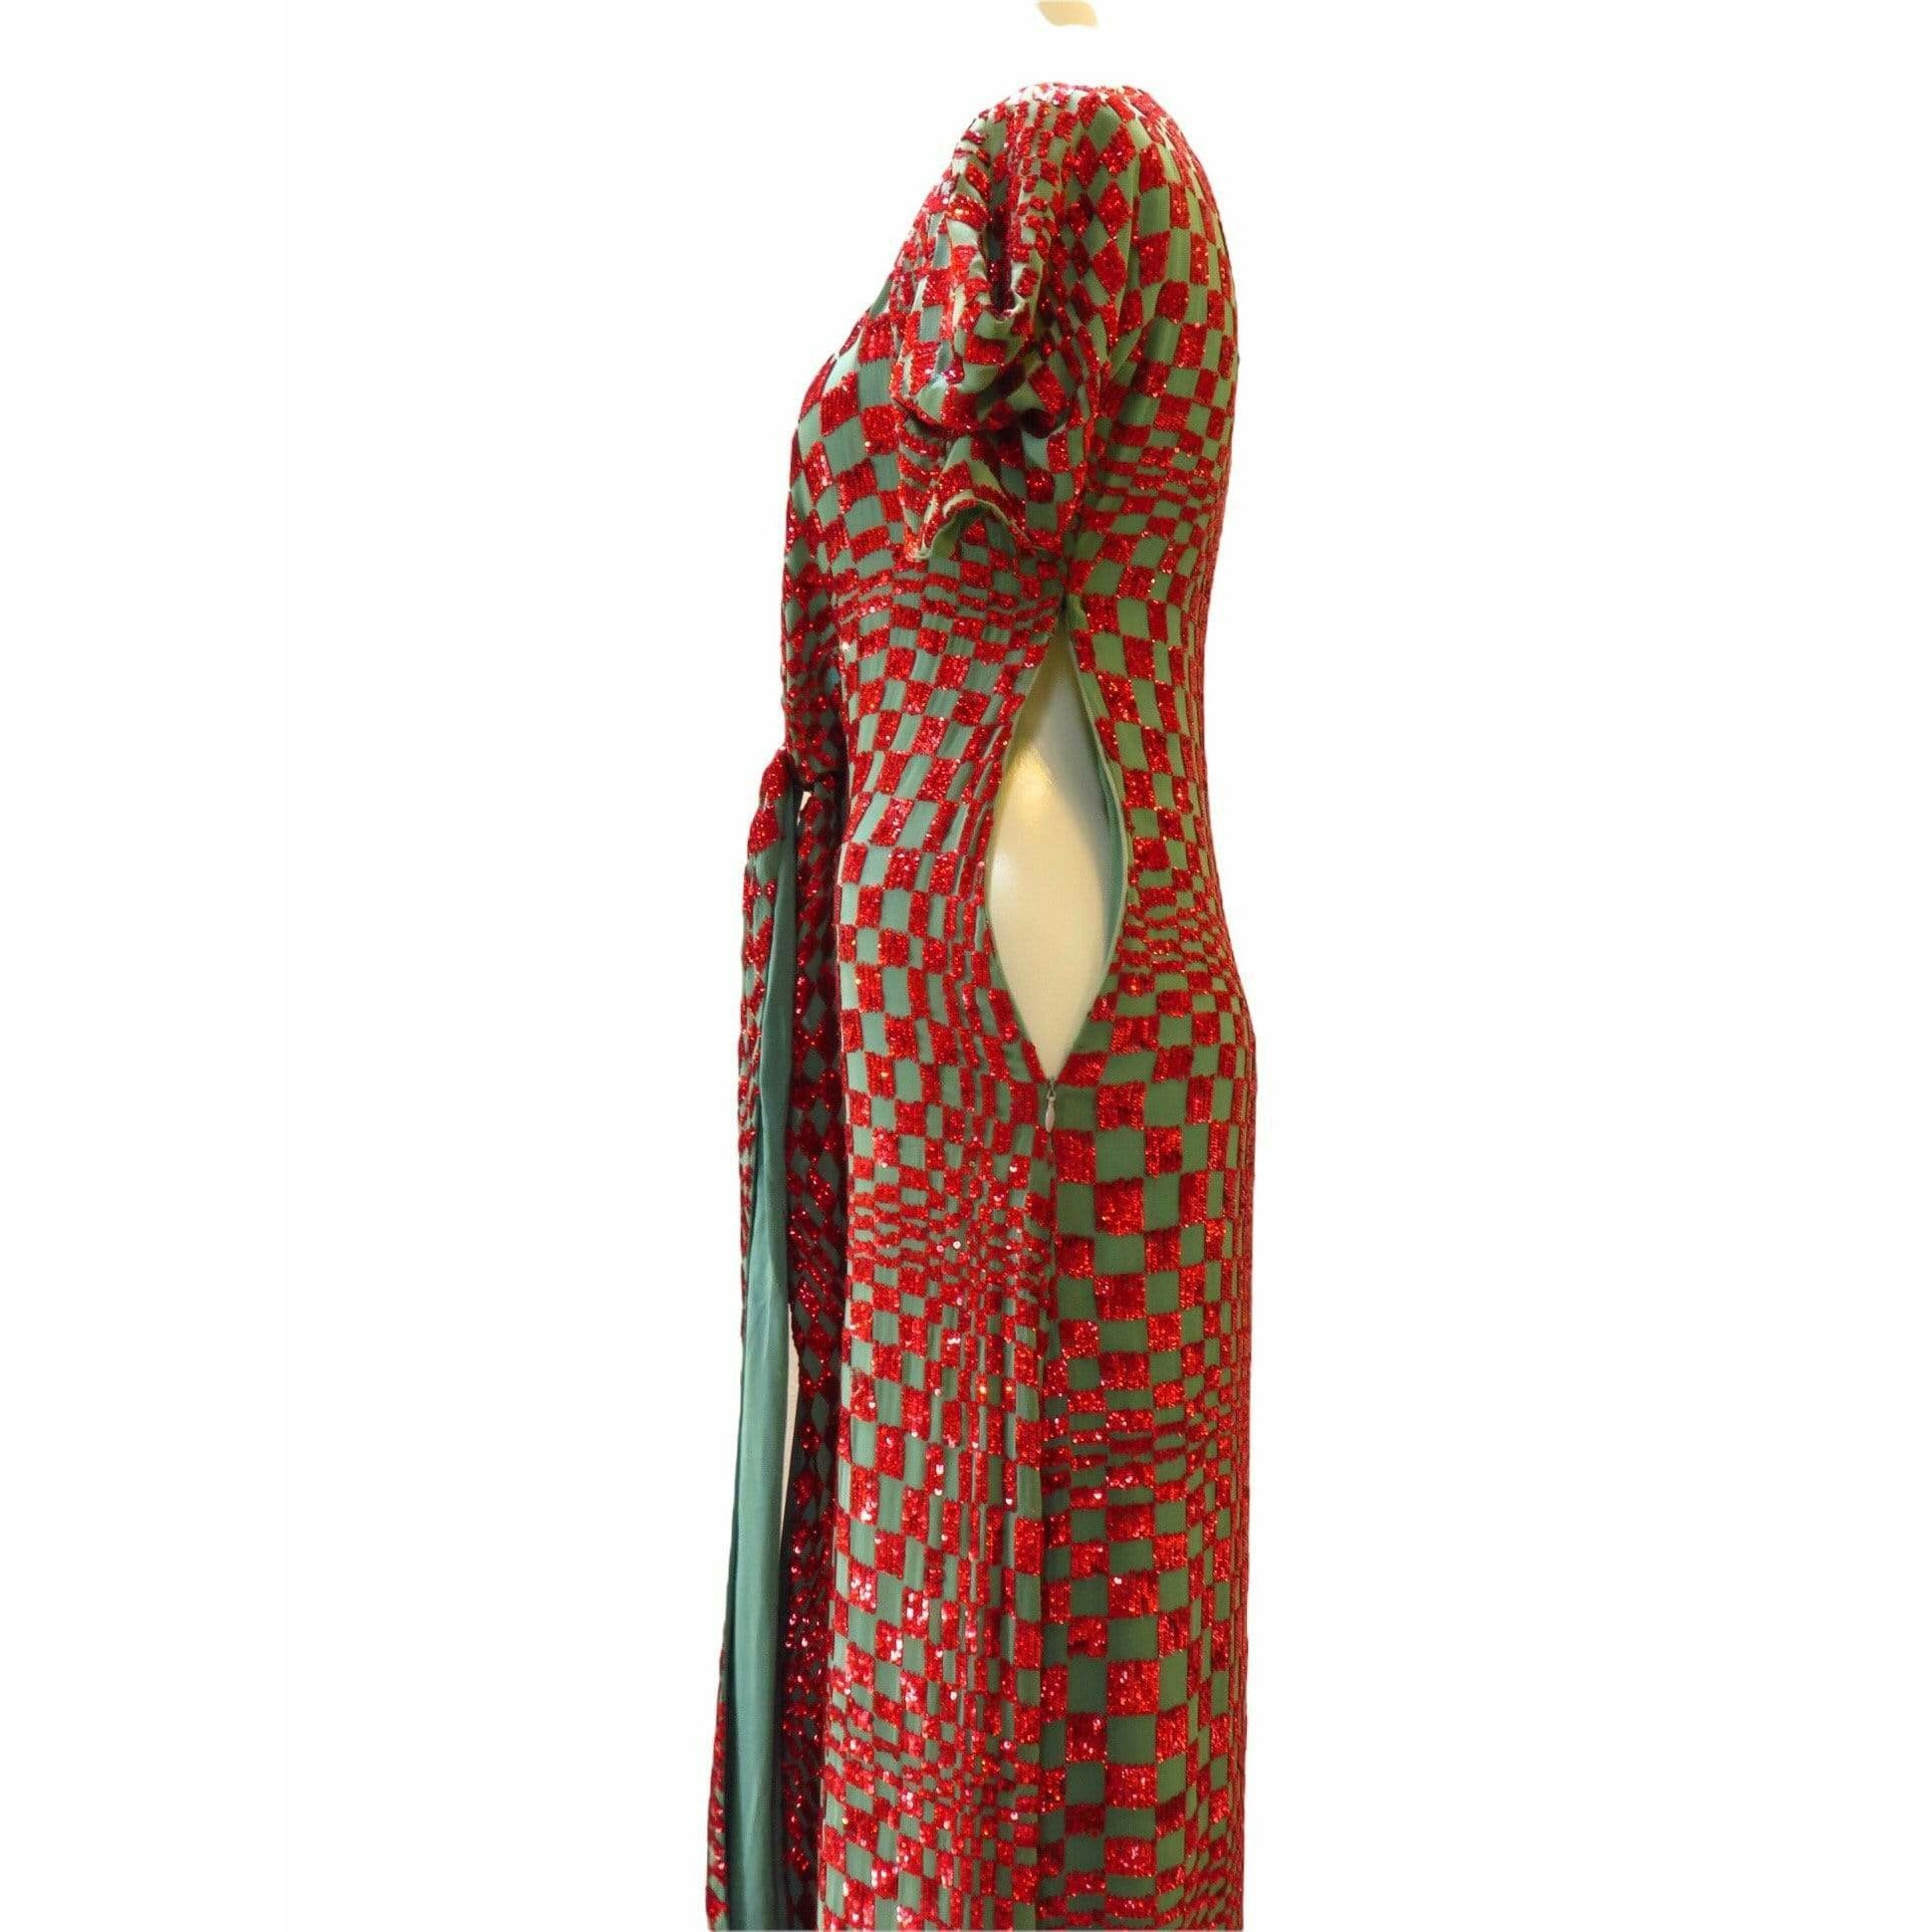 varun-sardana-red-sequin-harlequin-gown Dresses Saddle Brown